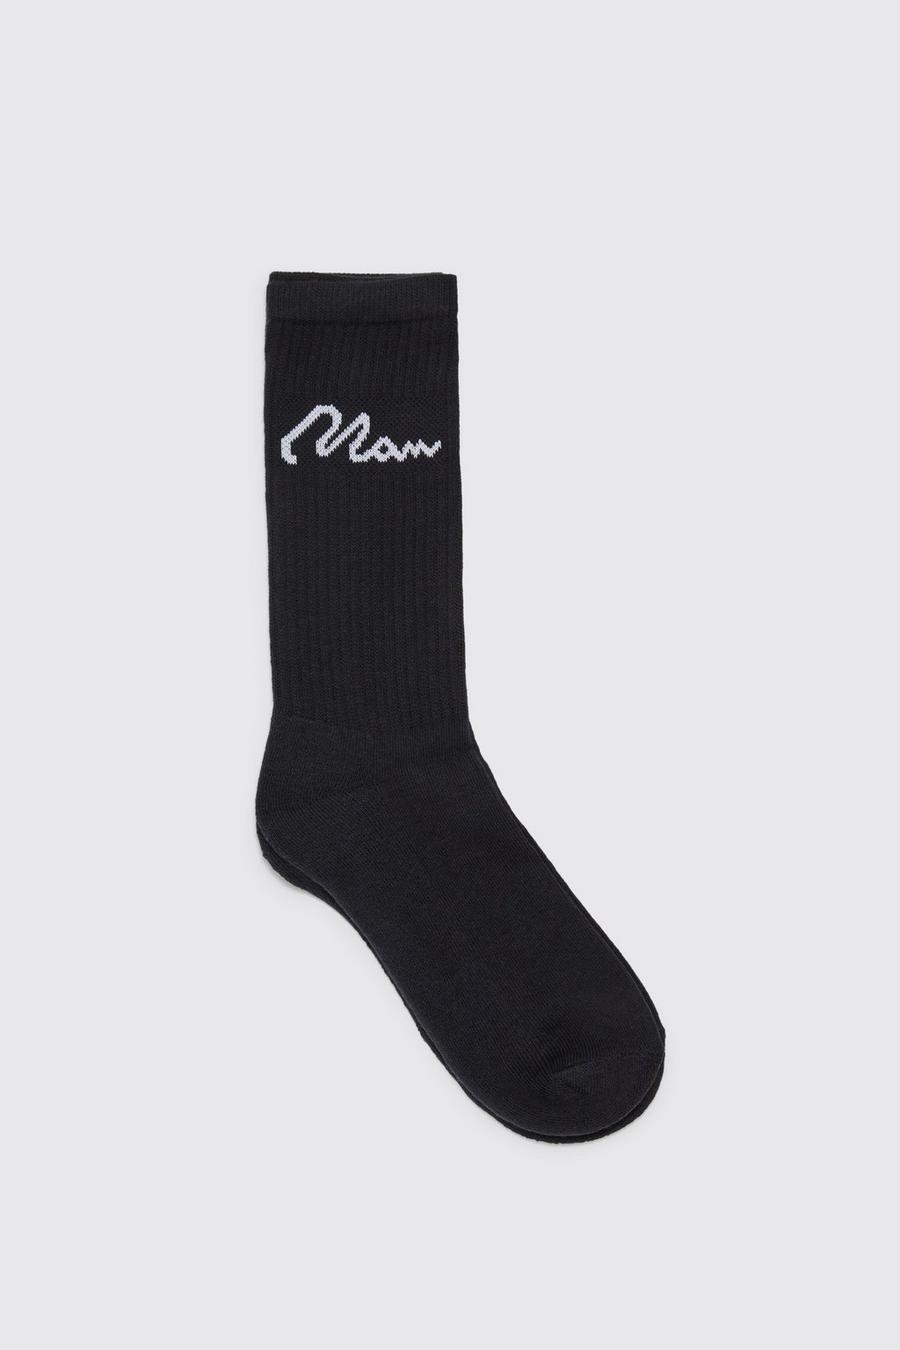 Pack de 7 pares de calcetines deportivos con firma MAN, Black image number 1